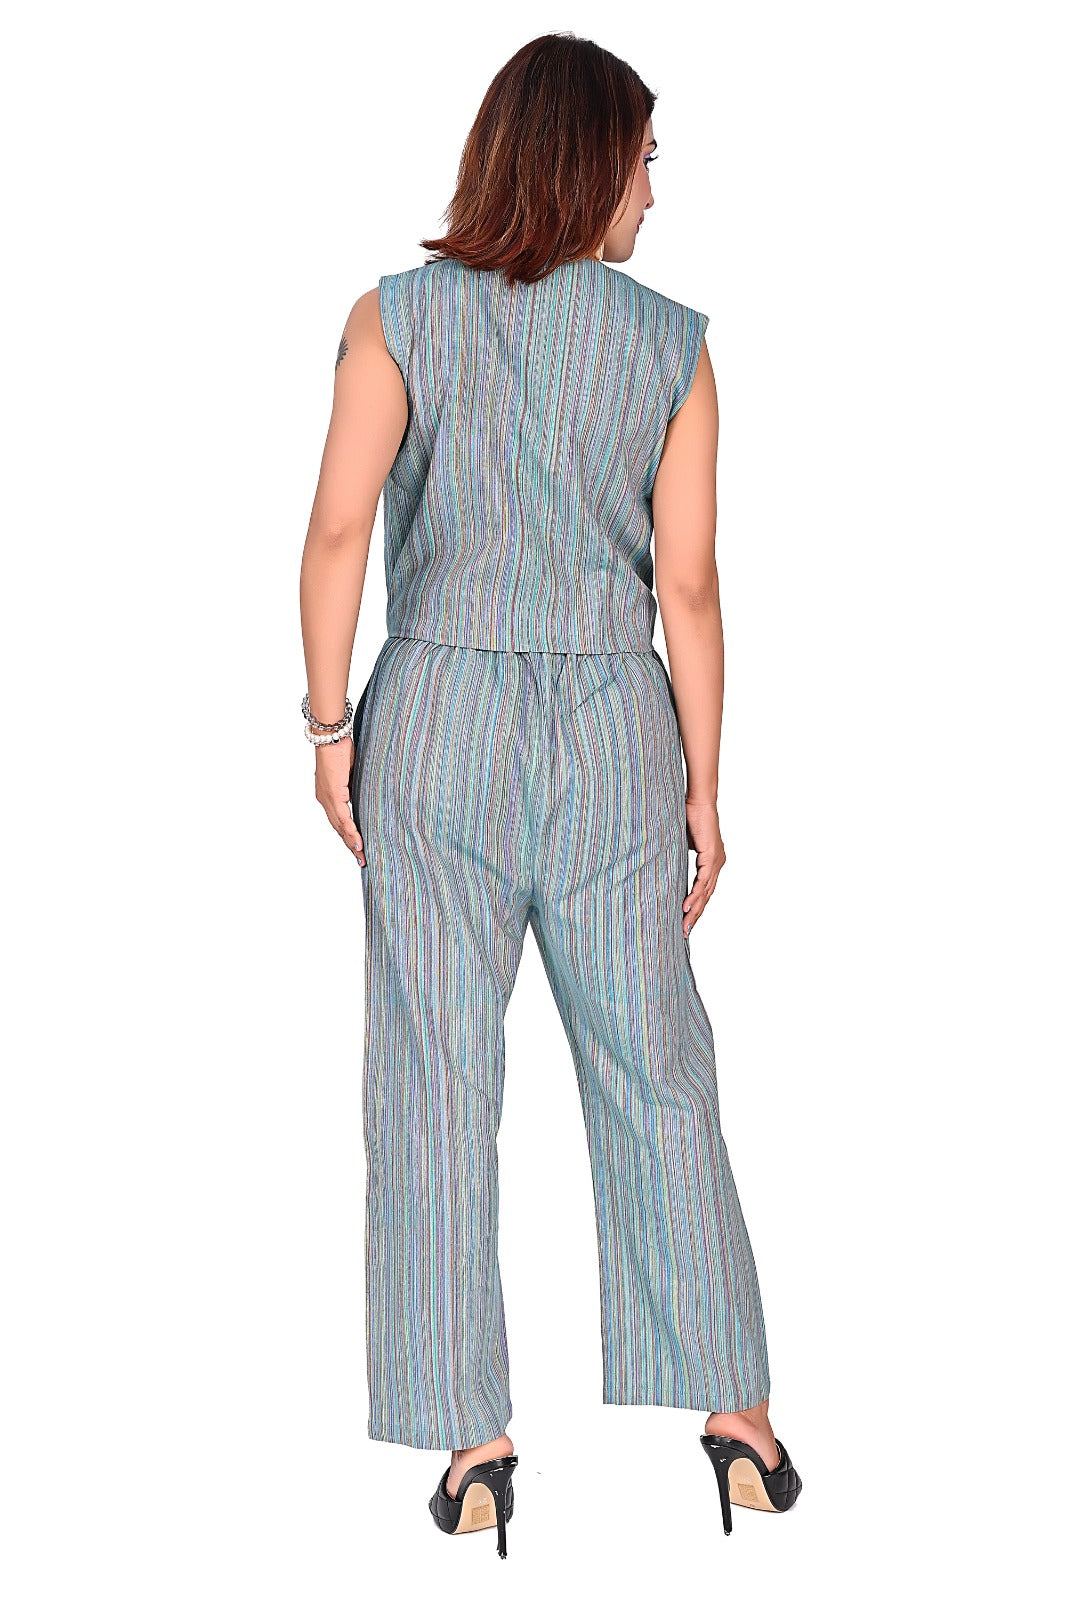 Nirmal online Premium Cotton Stripe co-ord set for Women in Green Colour